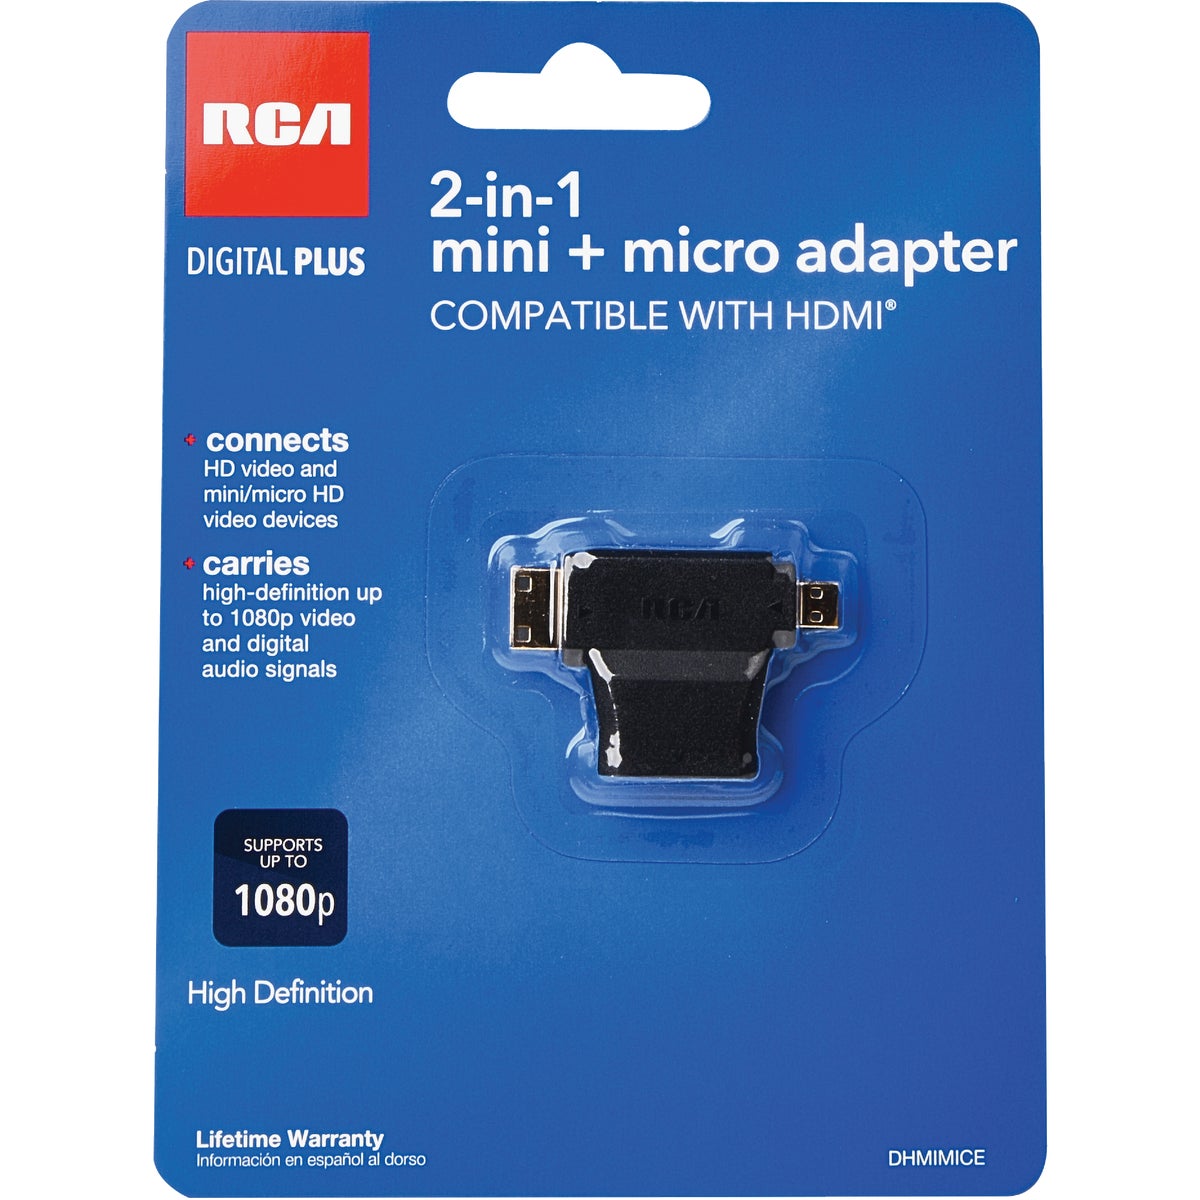 Item 502047, 2-in-1 mini plus micro HDMI adapter.